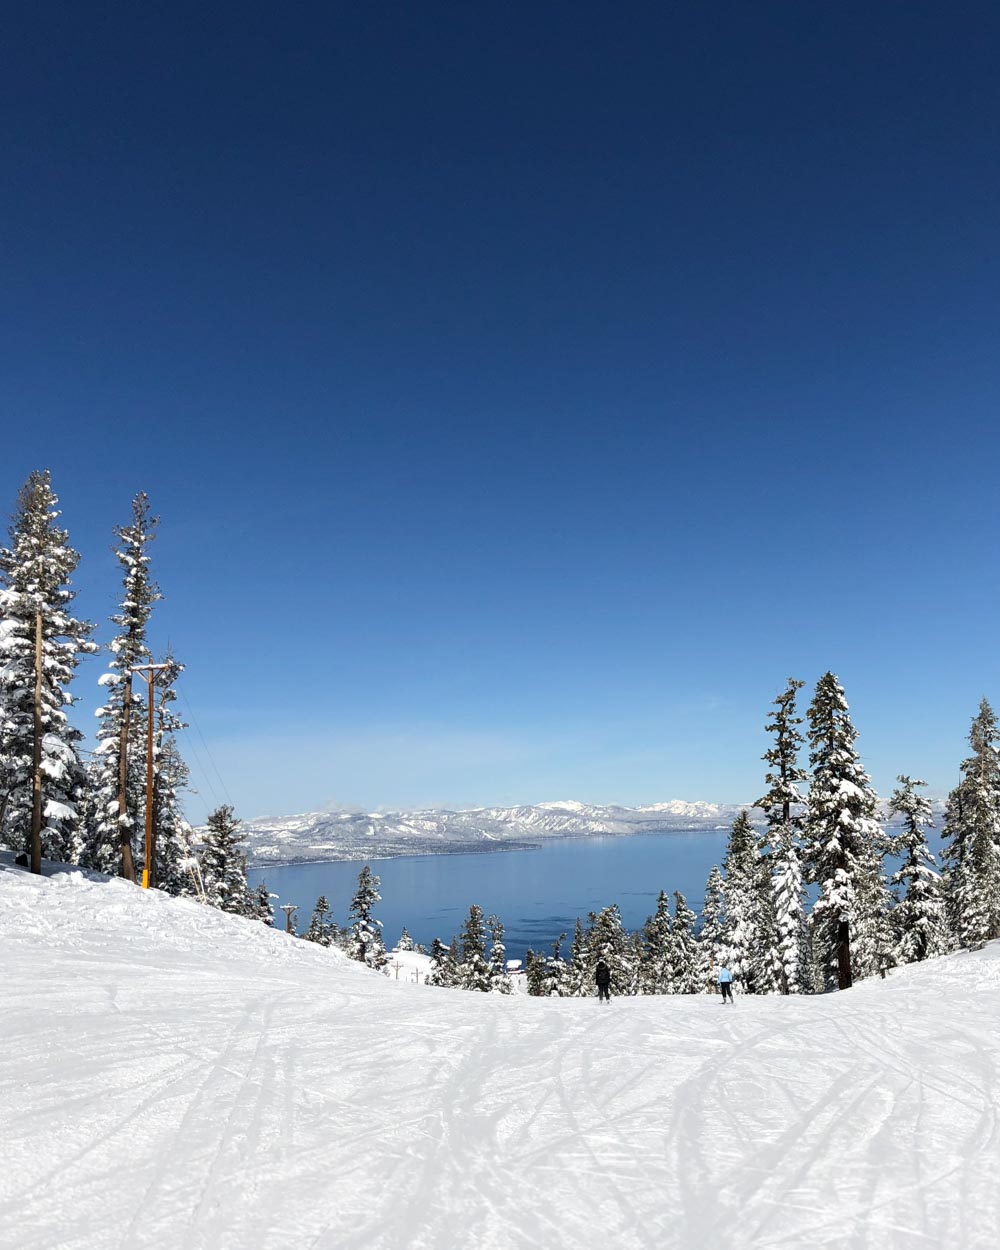 Snowy ski slopes at Heavenly Mountain Resort in Lake Tahoe